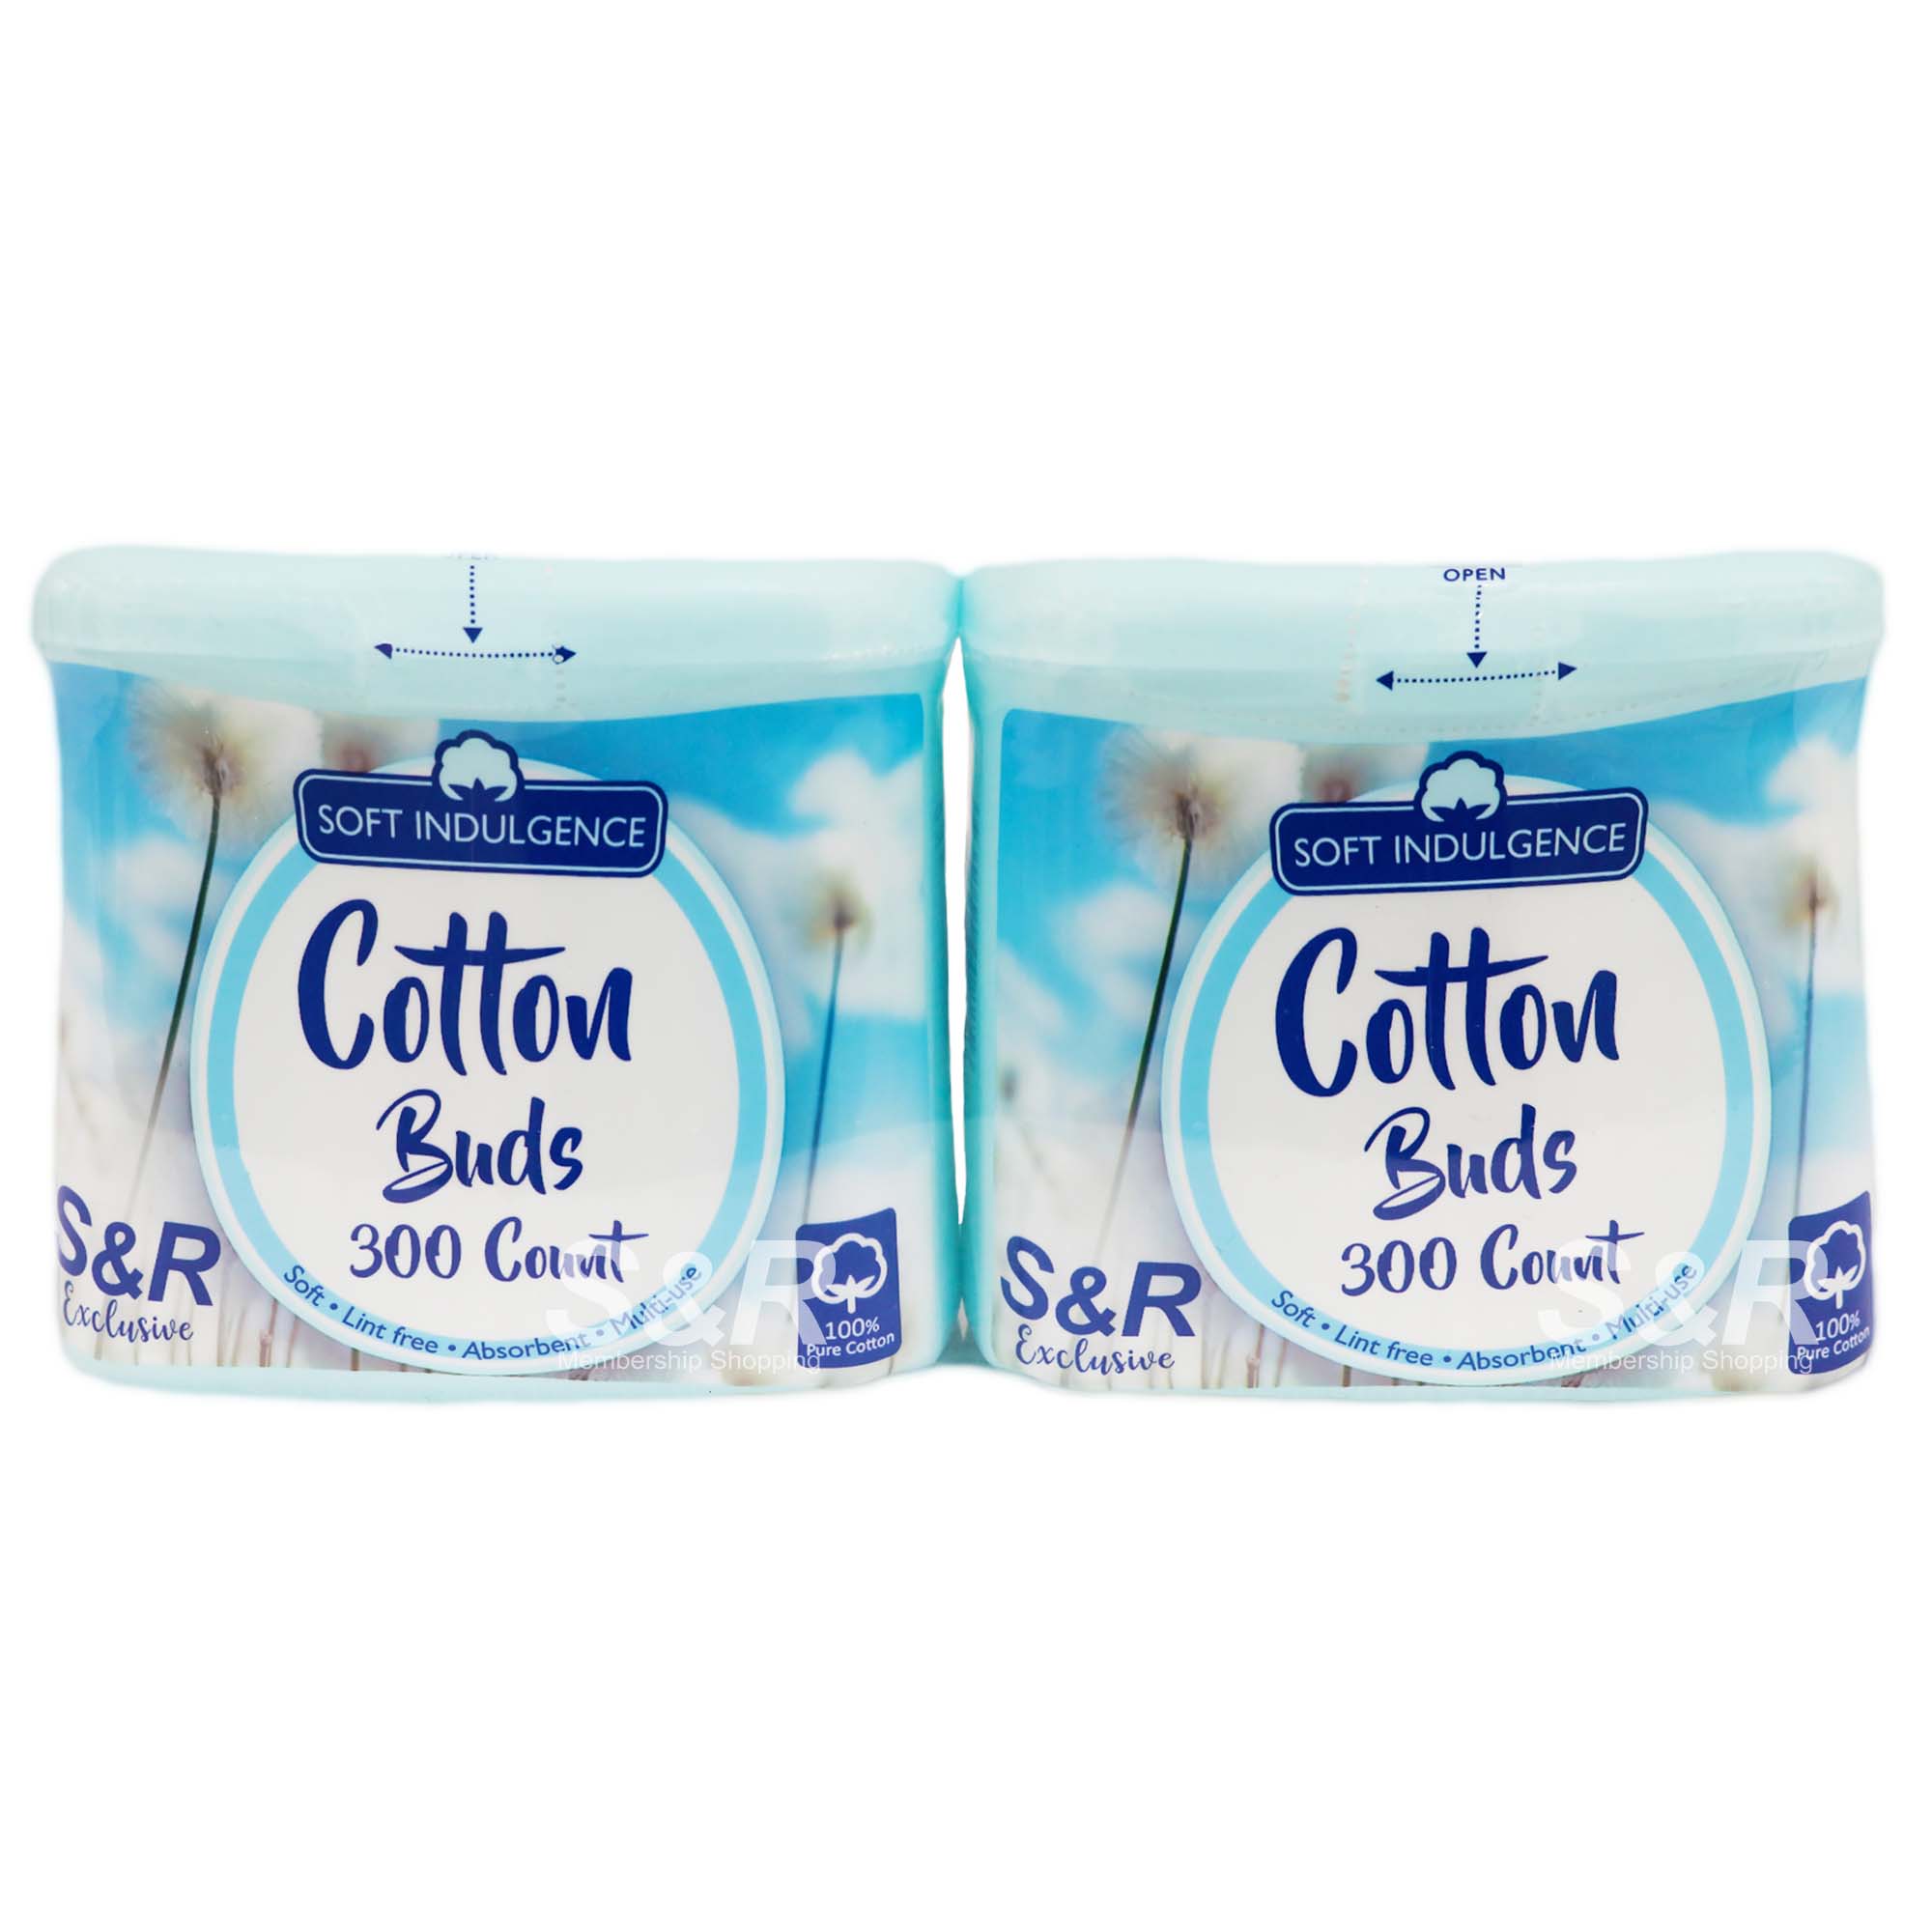 Soft Indulgence Cotton Buds 2 packs